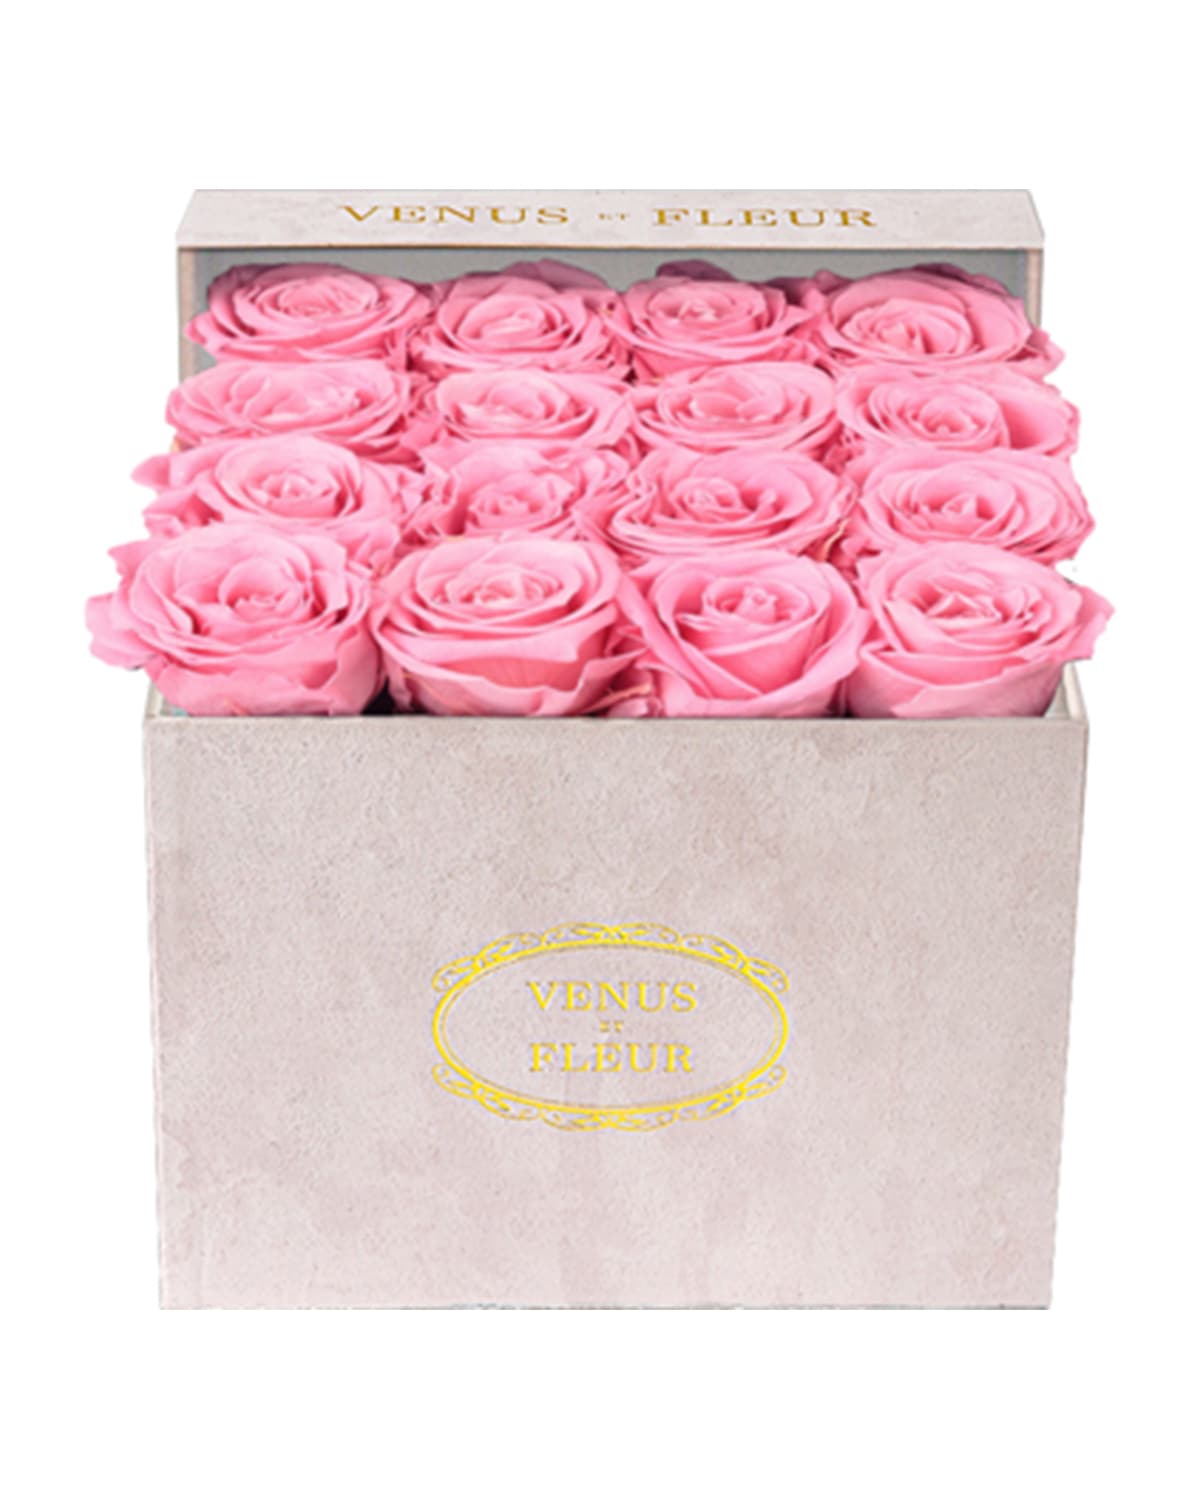 Venus Et Fleur Suede Small Square Rose Box In Pink